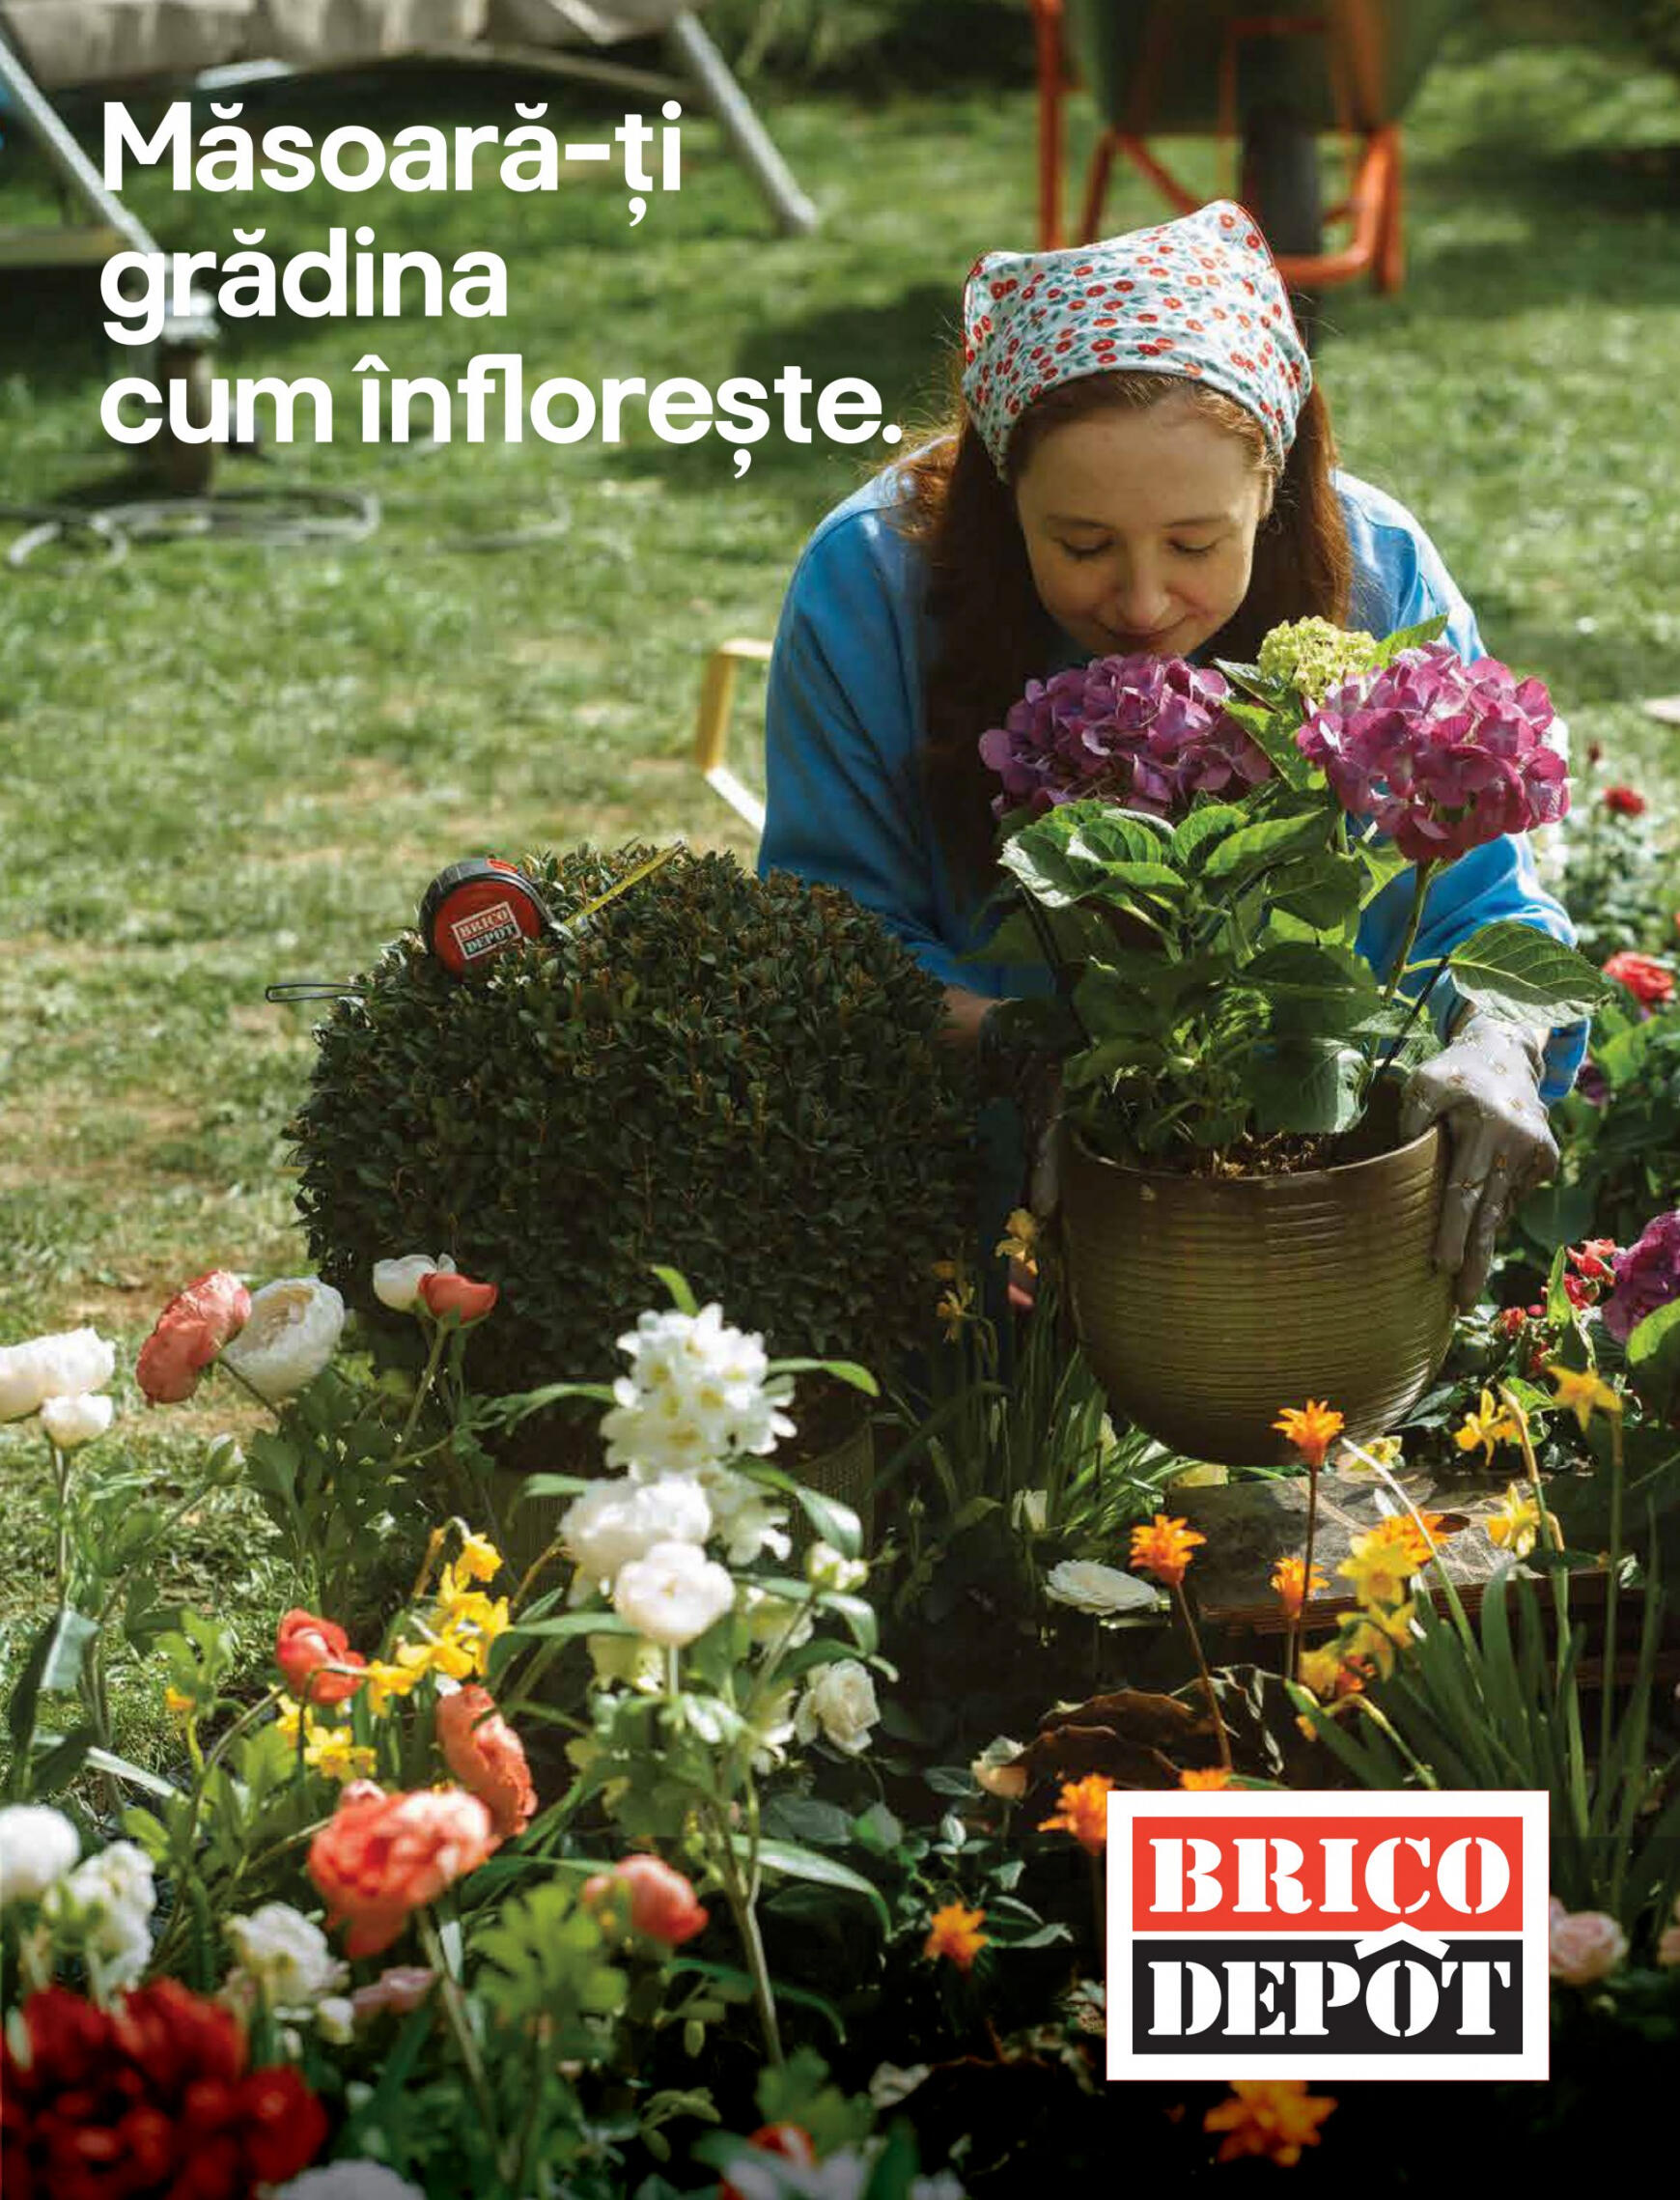 brico-depot - Catalog nou Brico Depot 11.04. - 30.06. - page: 1